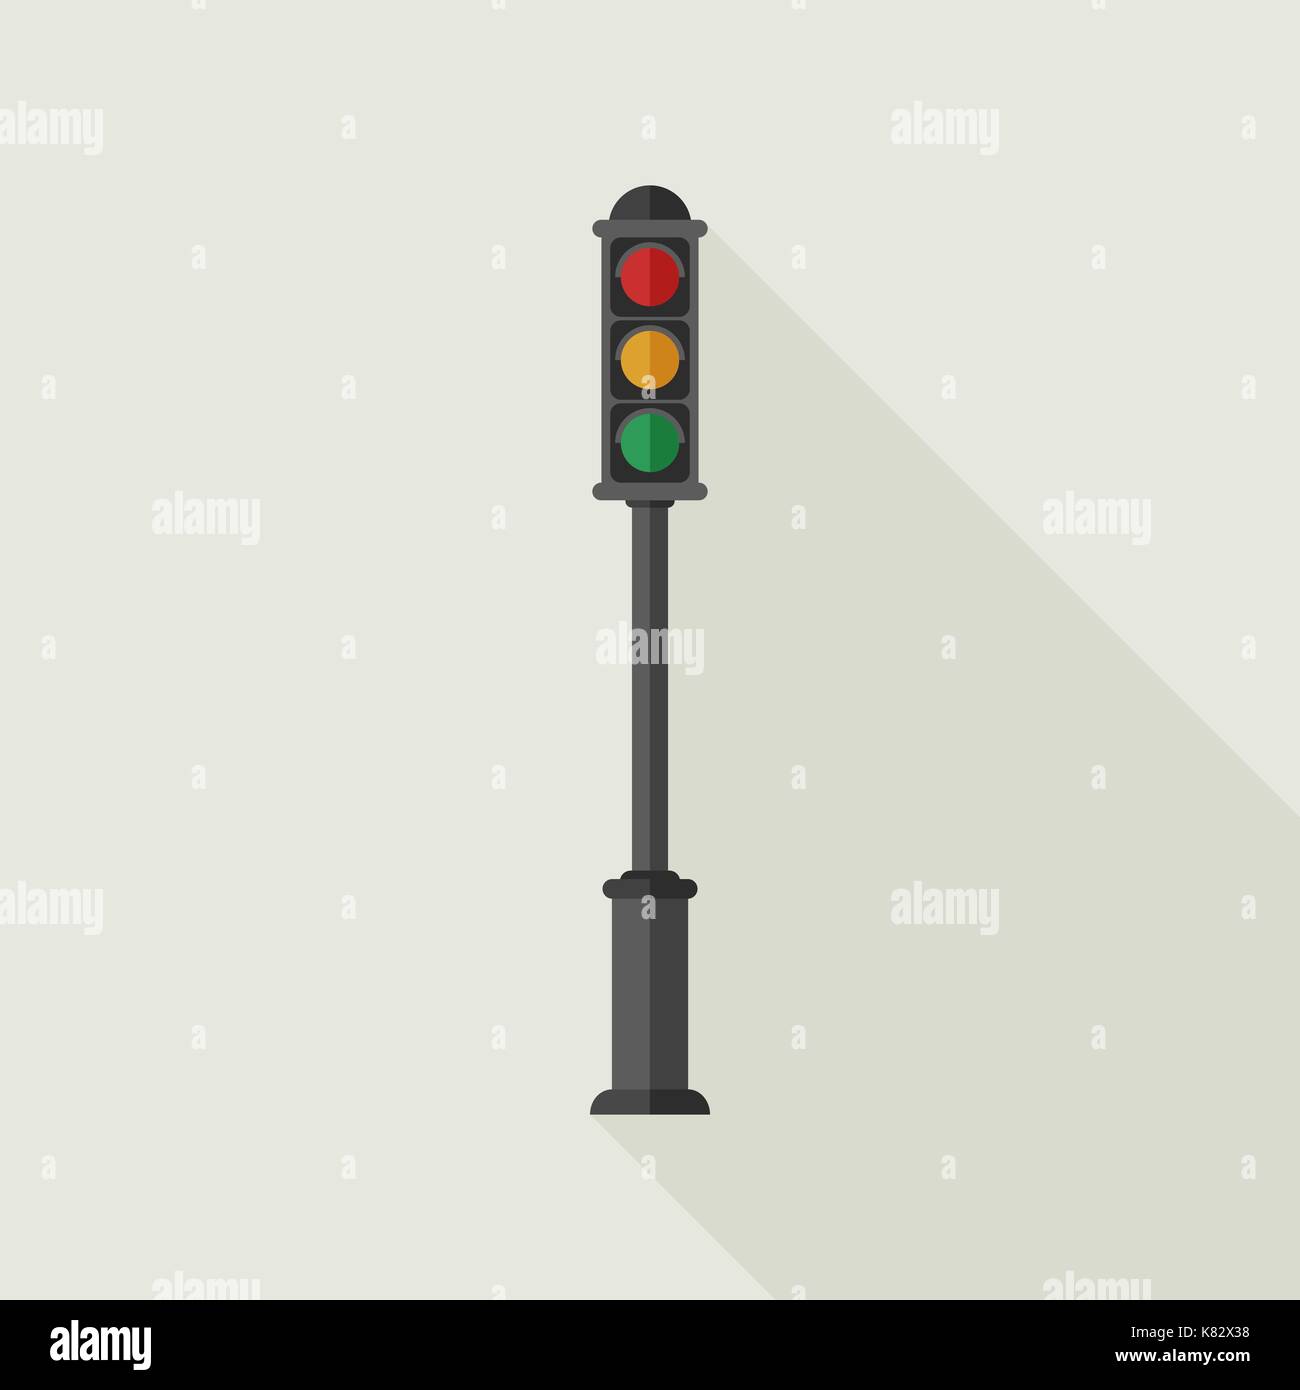 Traffic light icon Stock Vector